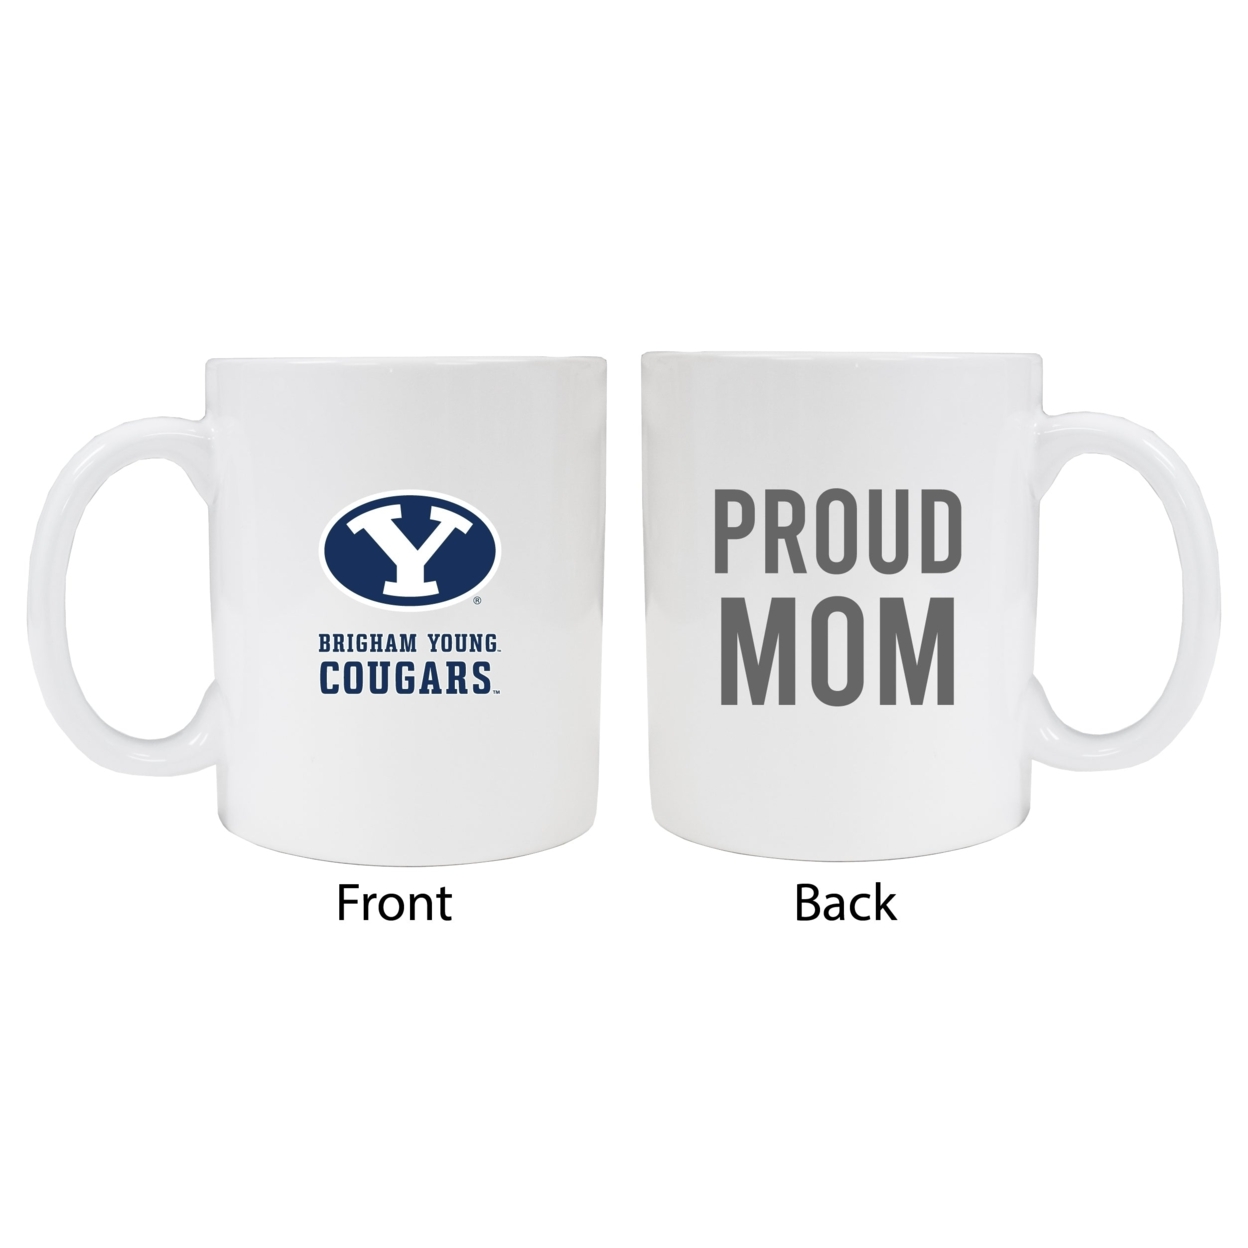 Brigham Young Cougars Proud Mom Ceramic Coffee Mug - White